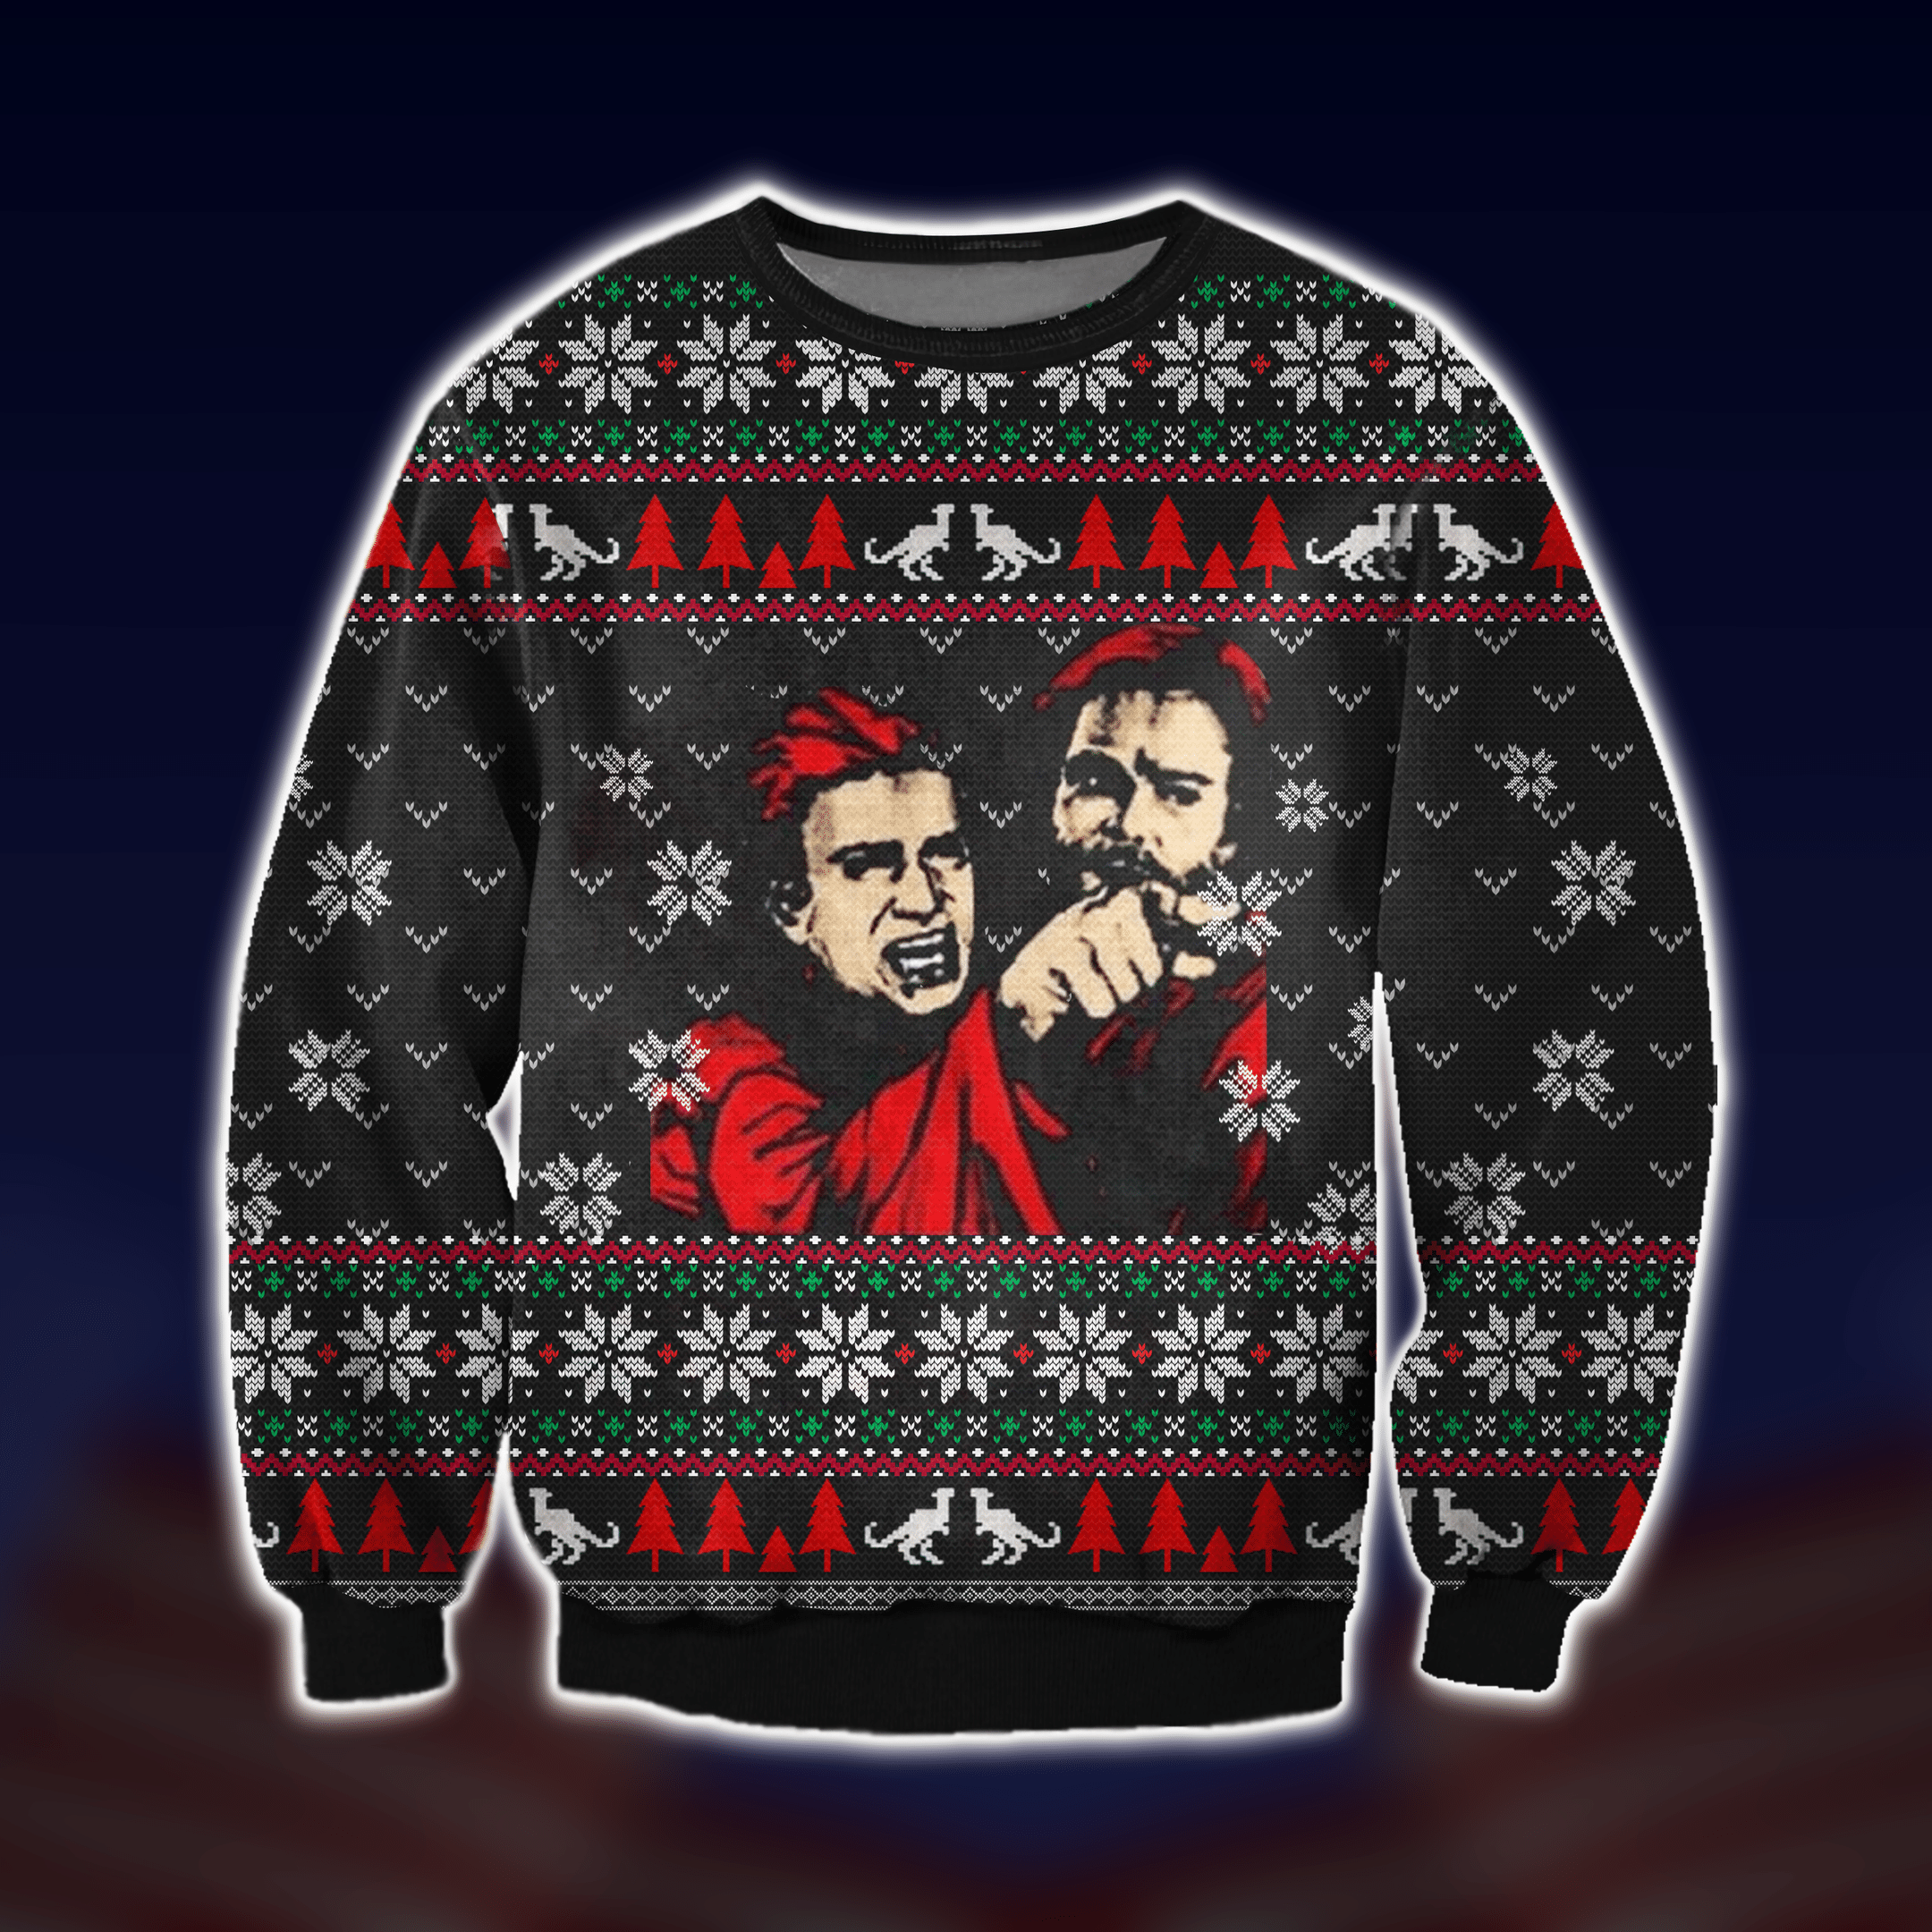 Anakin Skywalker Yelling Meme Ugly Christmas Sweater - Eprxerian Shop